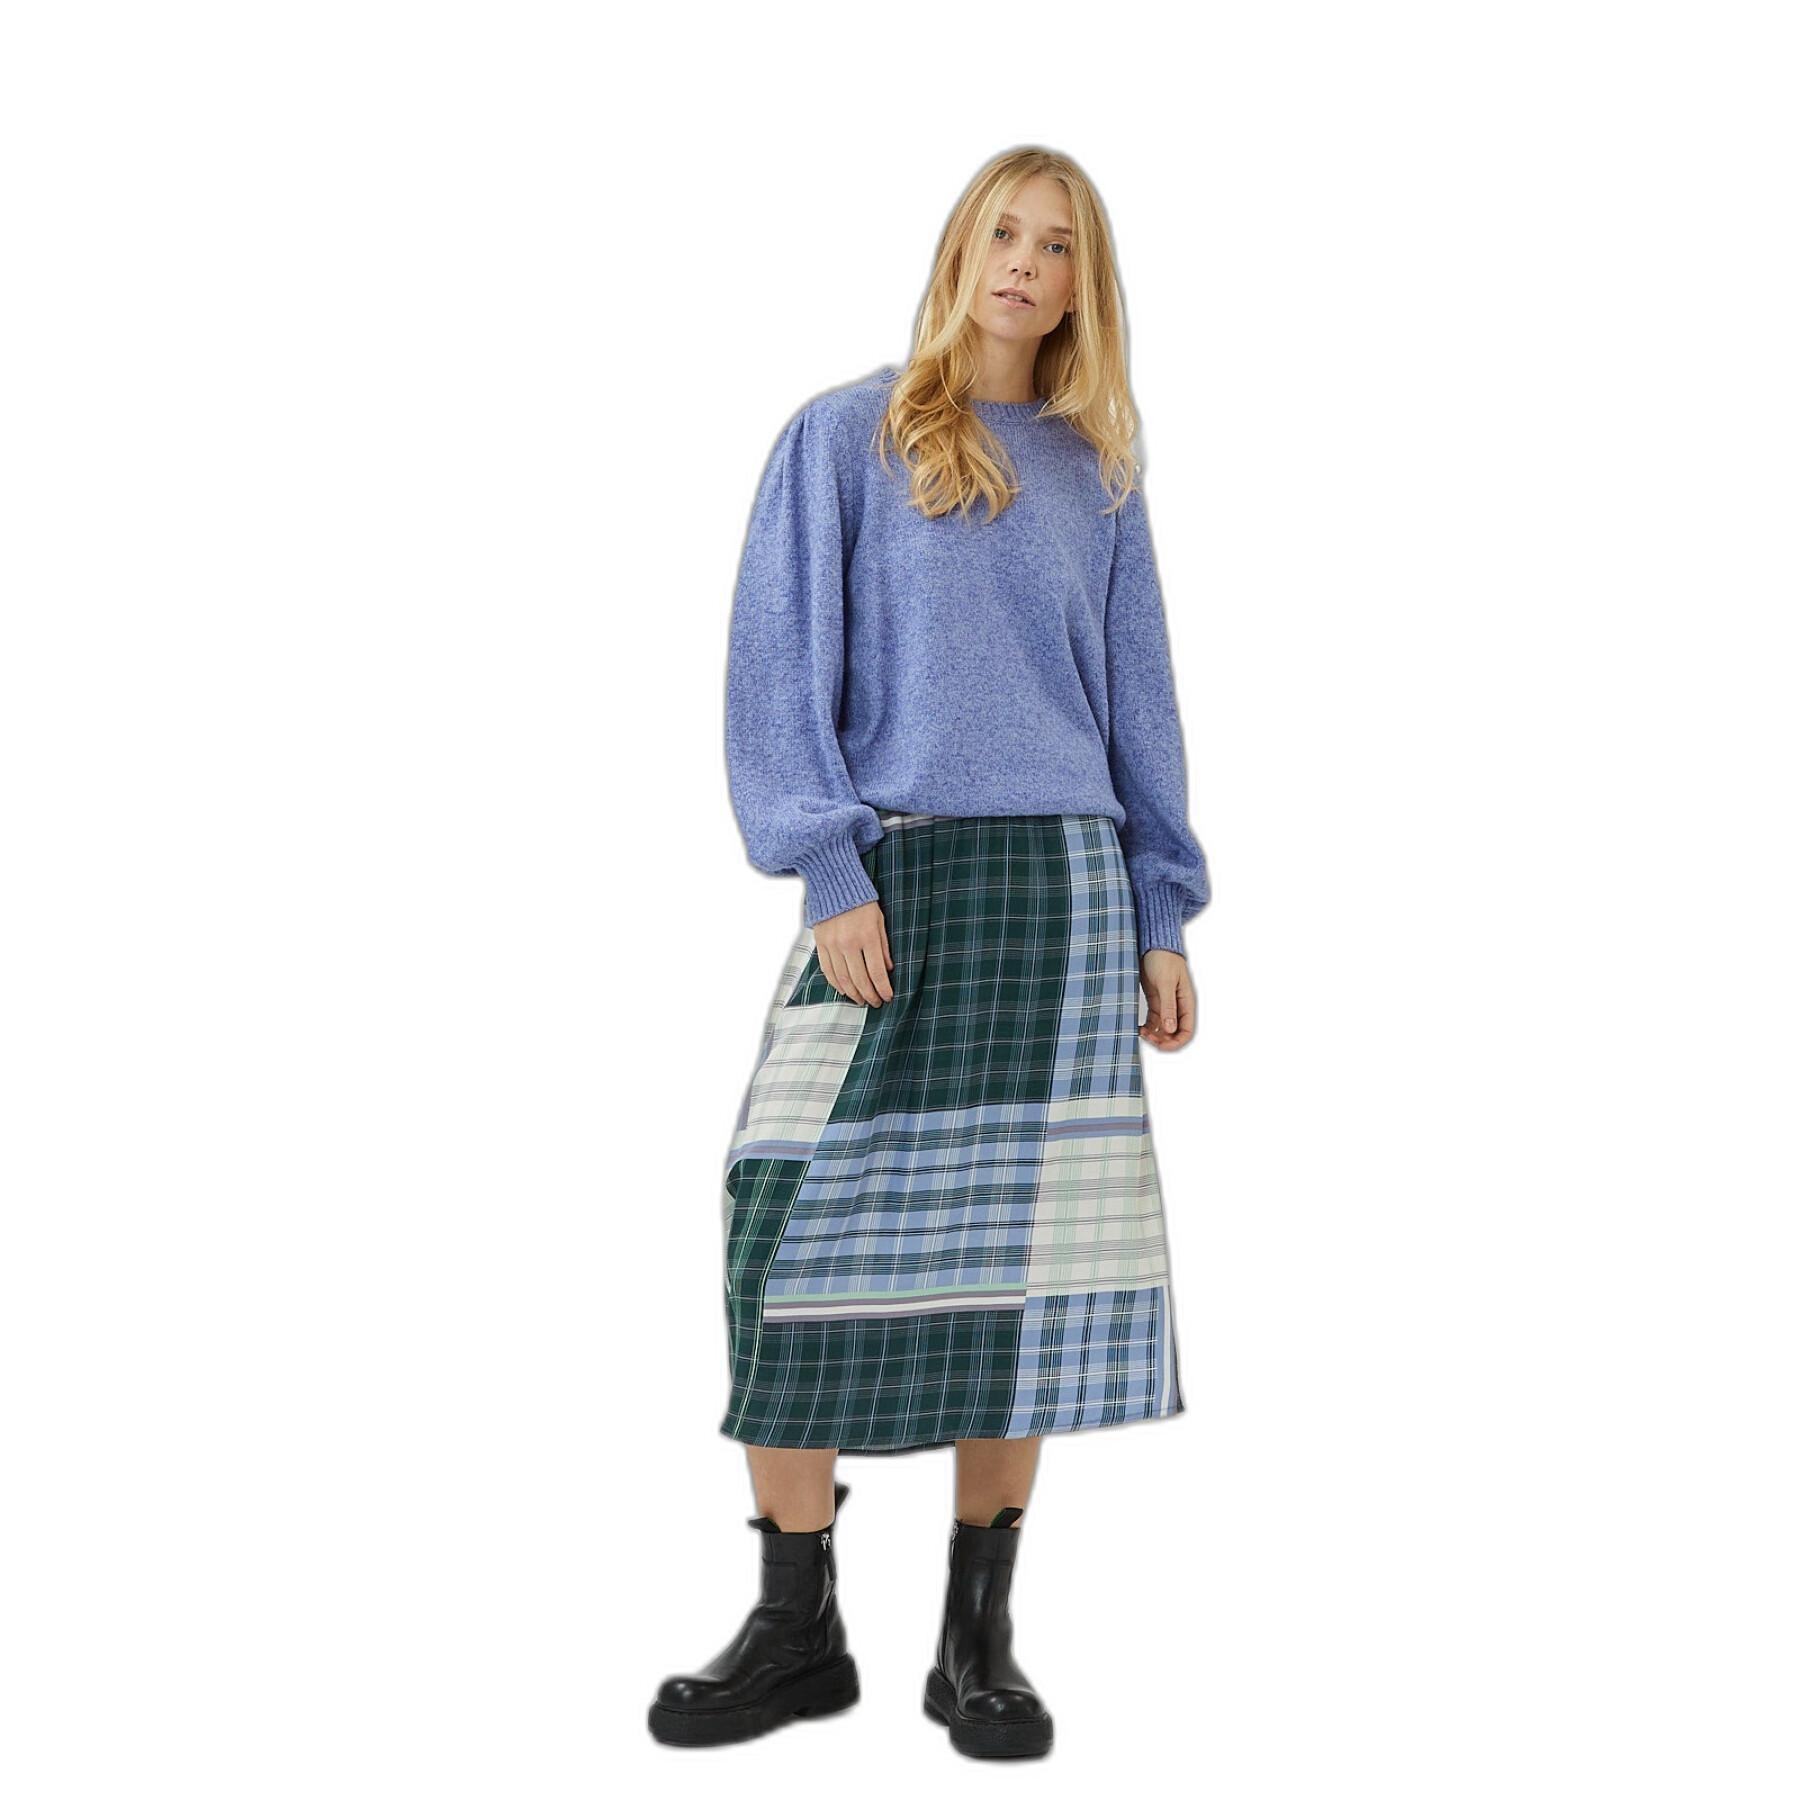 Women's skirt Minimum Mola 9602